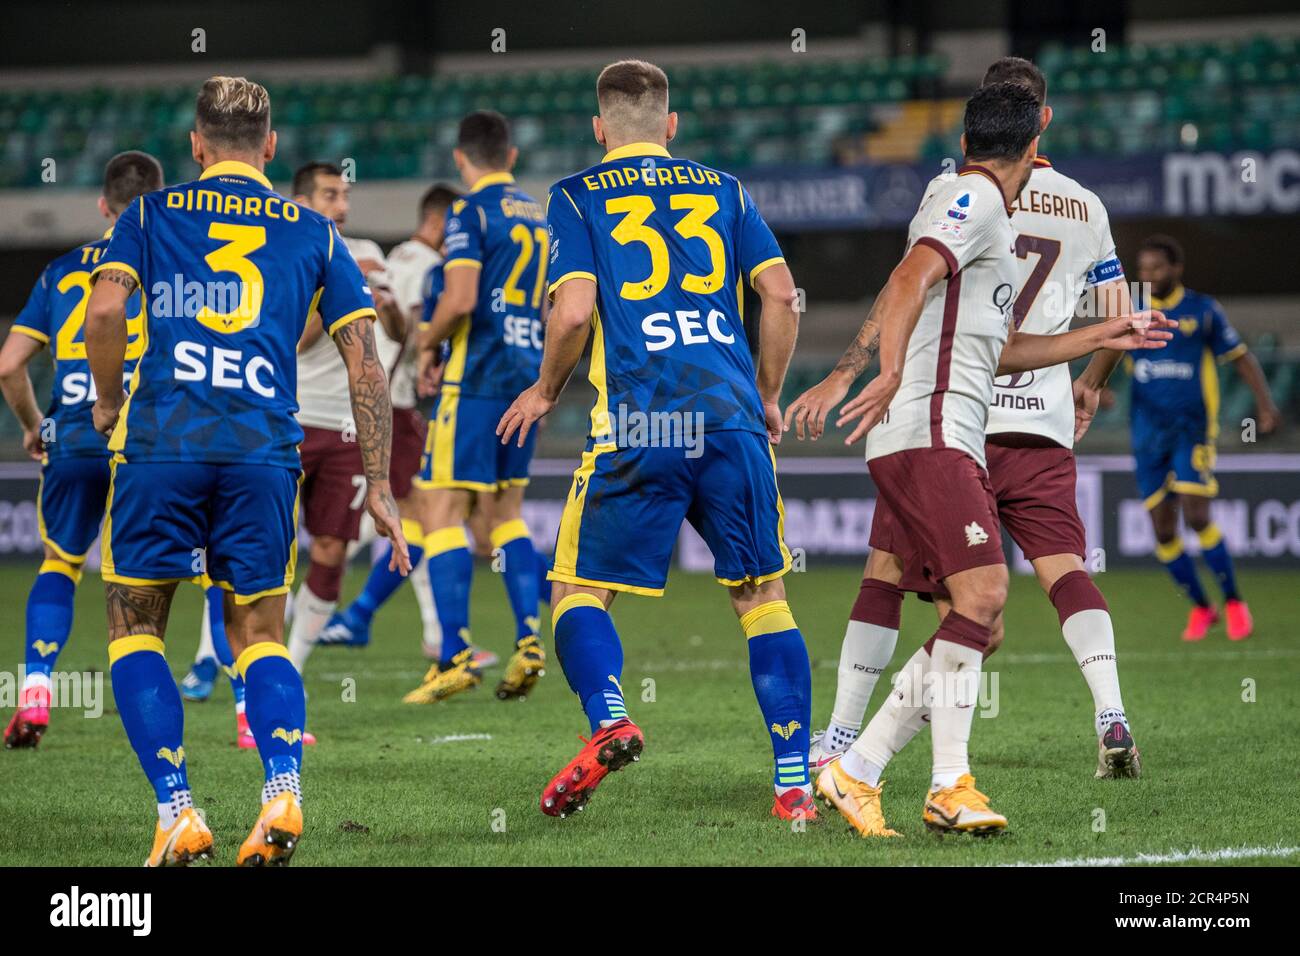 action during Hellas Verona vs Roma, italian Serie A soccer match, Verona, Italy, 19 Sep 2020 Stock Photo